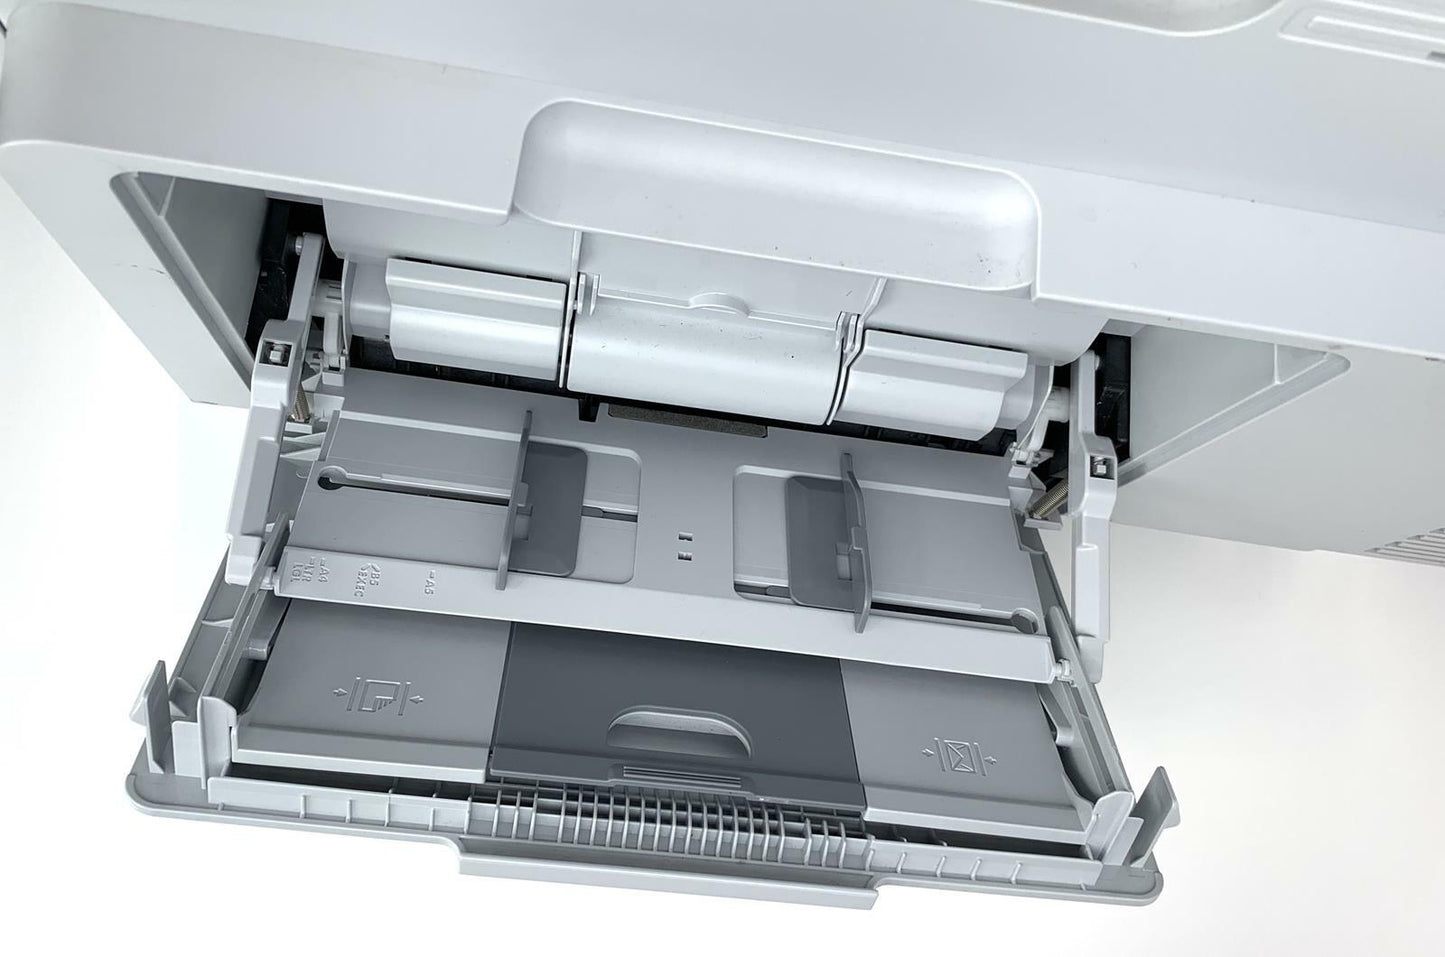 HP CP4525 Color LaserJet CC494A Desktop Network Laser Printer - Pickup